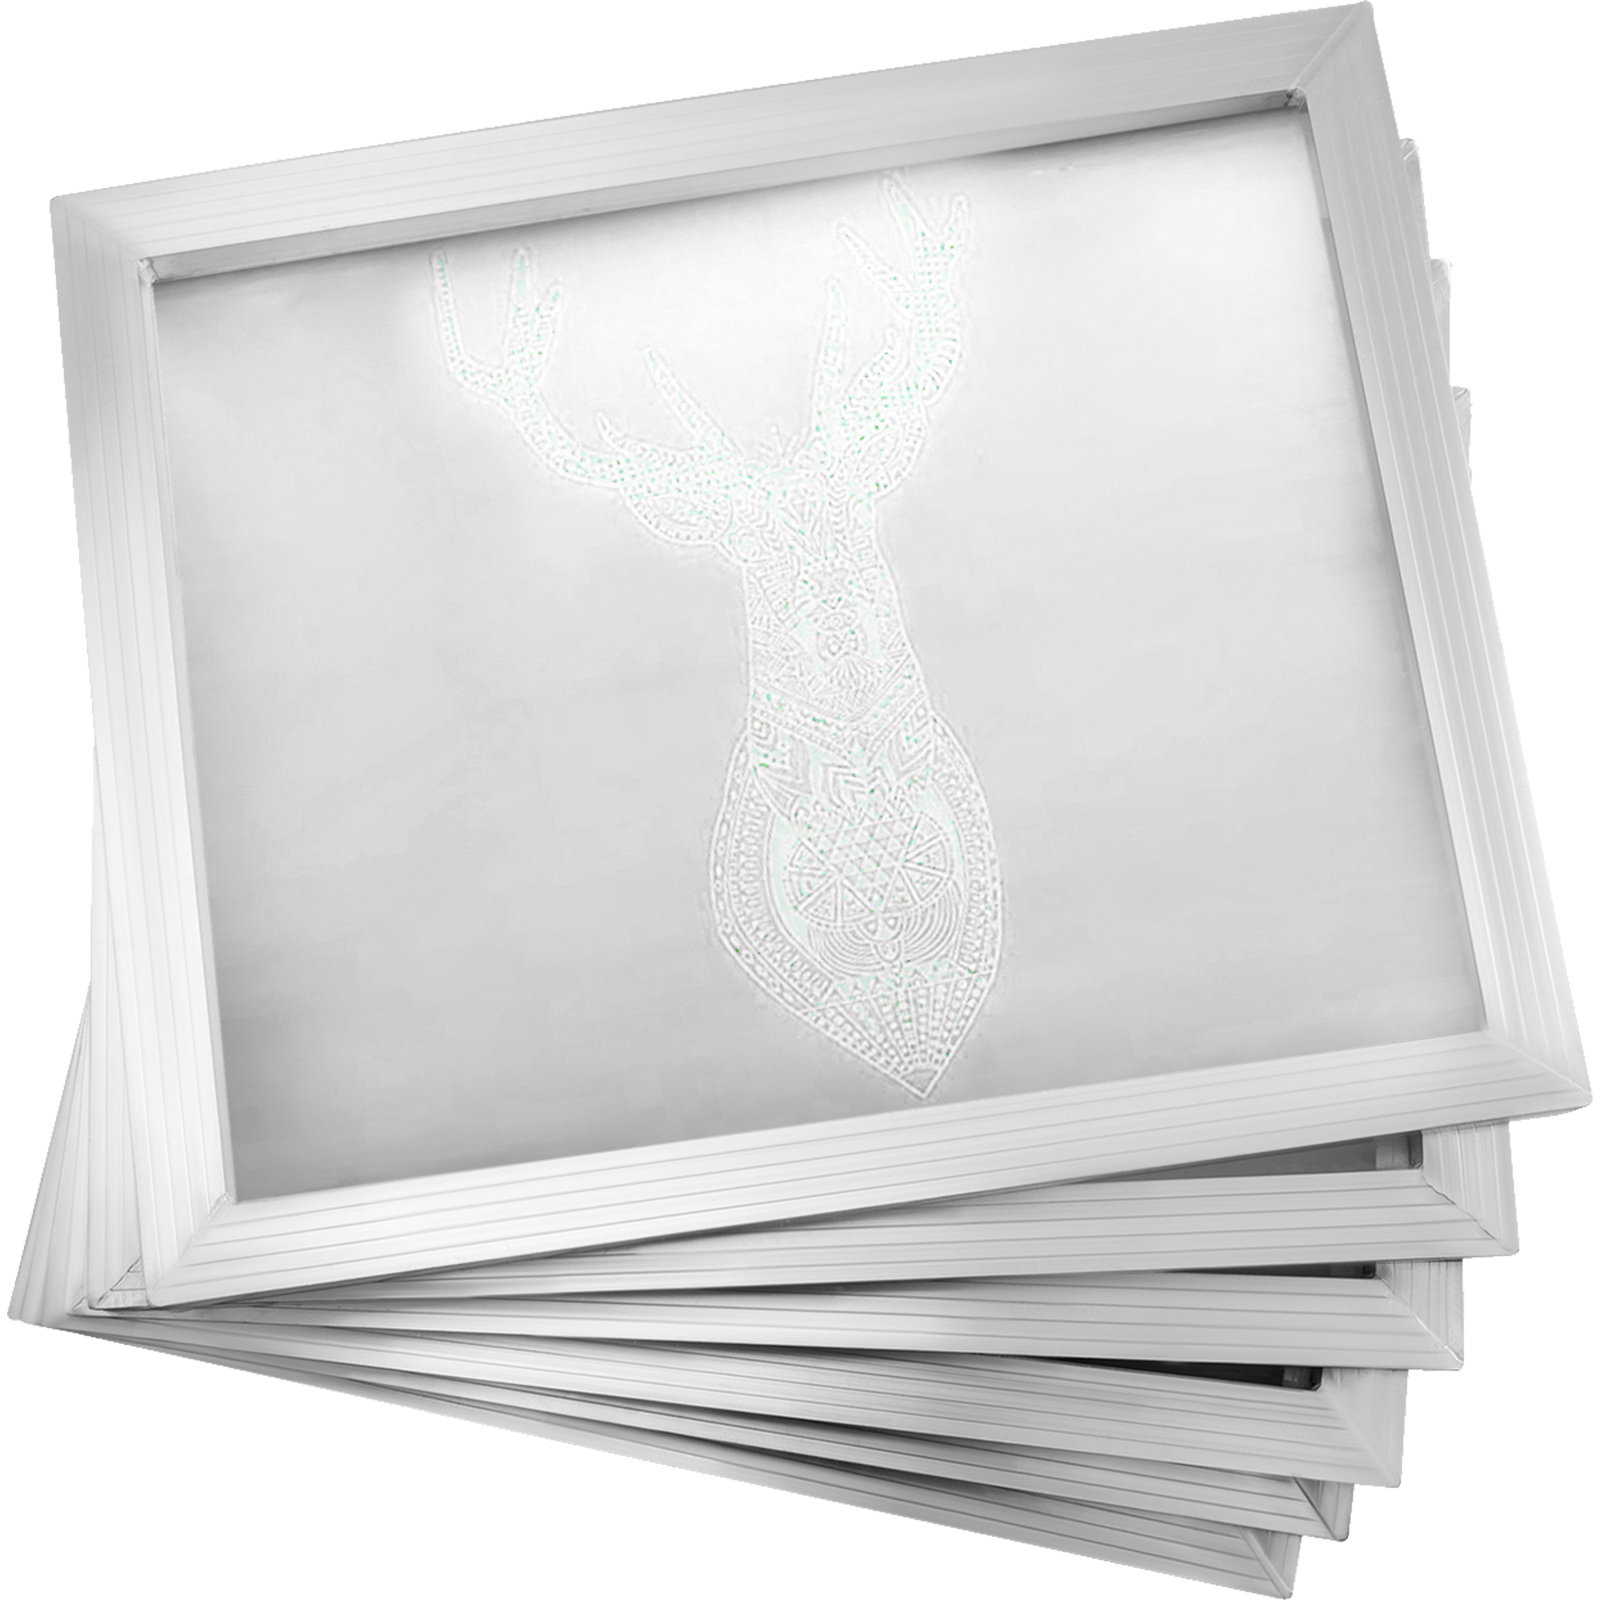 6 PCS Aluminum Frame Silk Screen Printing Screens 20" x 24" White 160 Mesh Count 